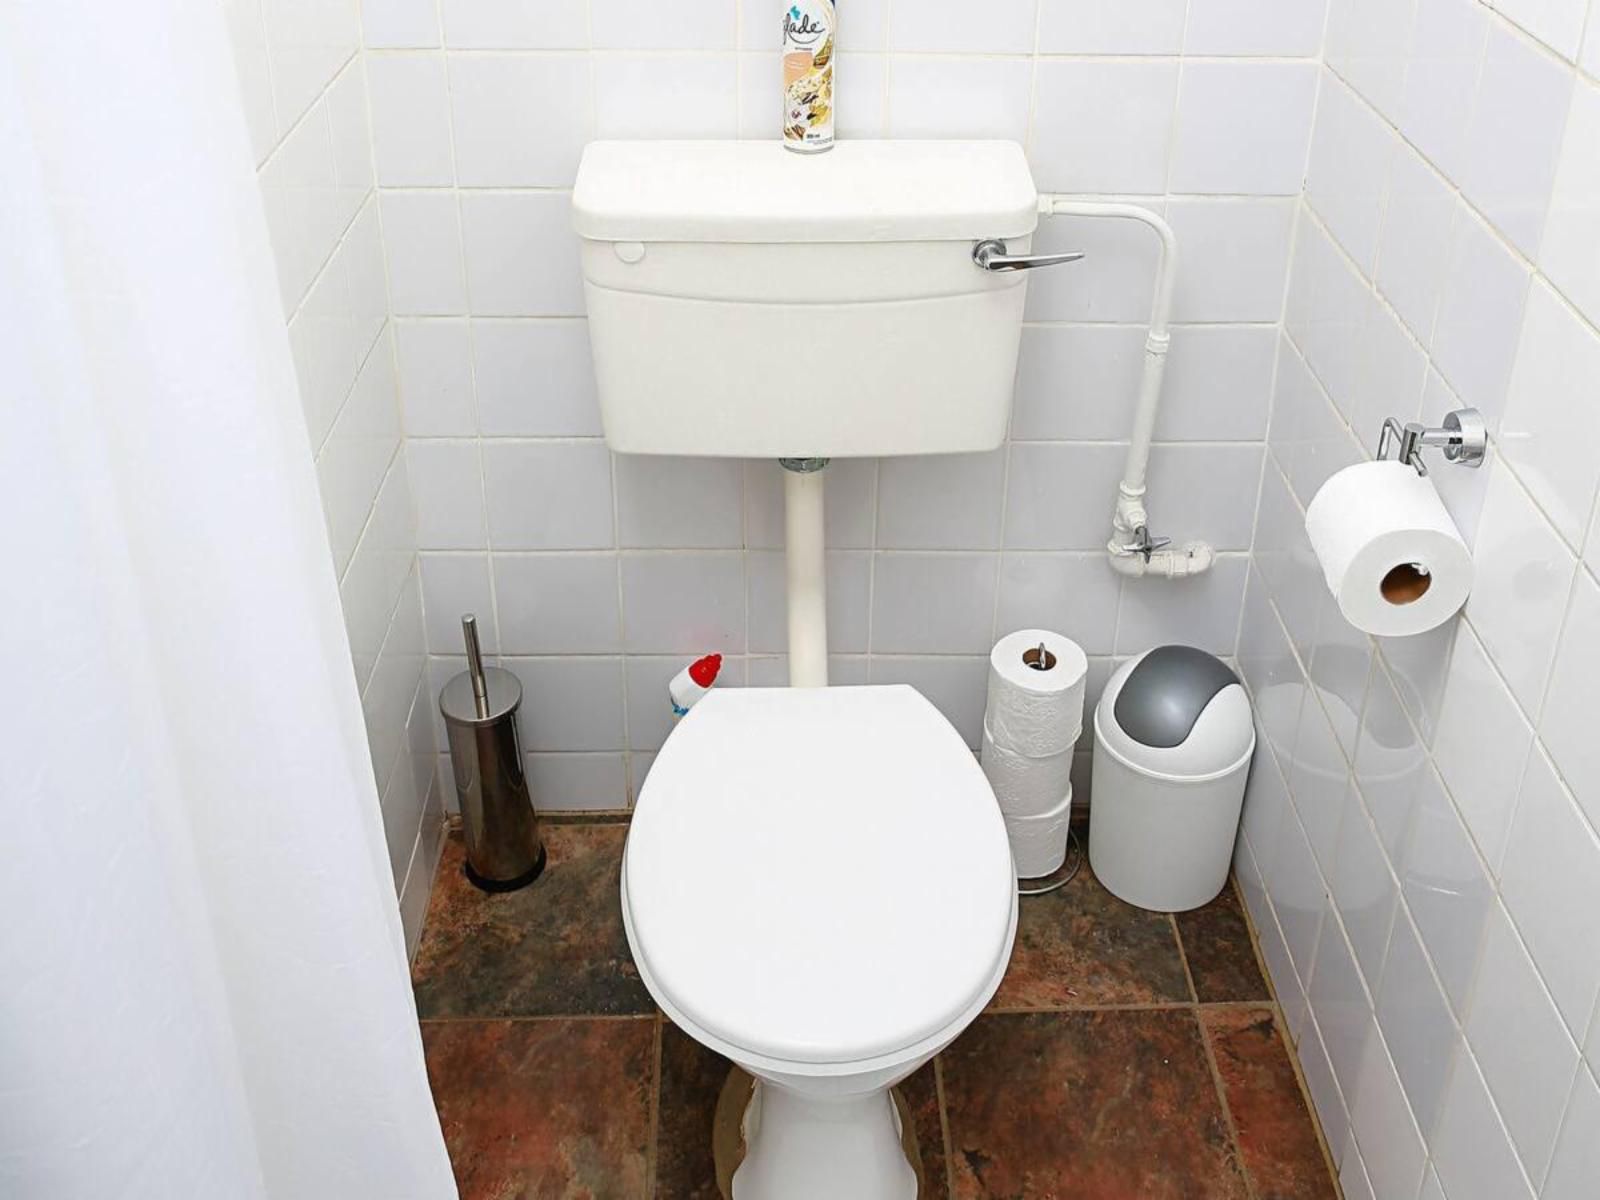 Klinkies Potchefstroom Potchefstroom North West Province South Africa Bathroom